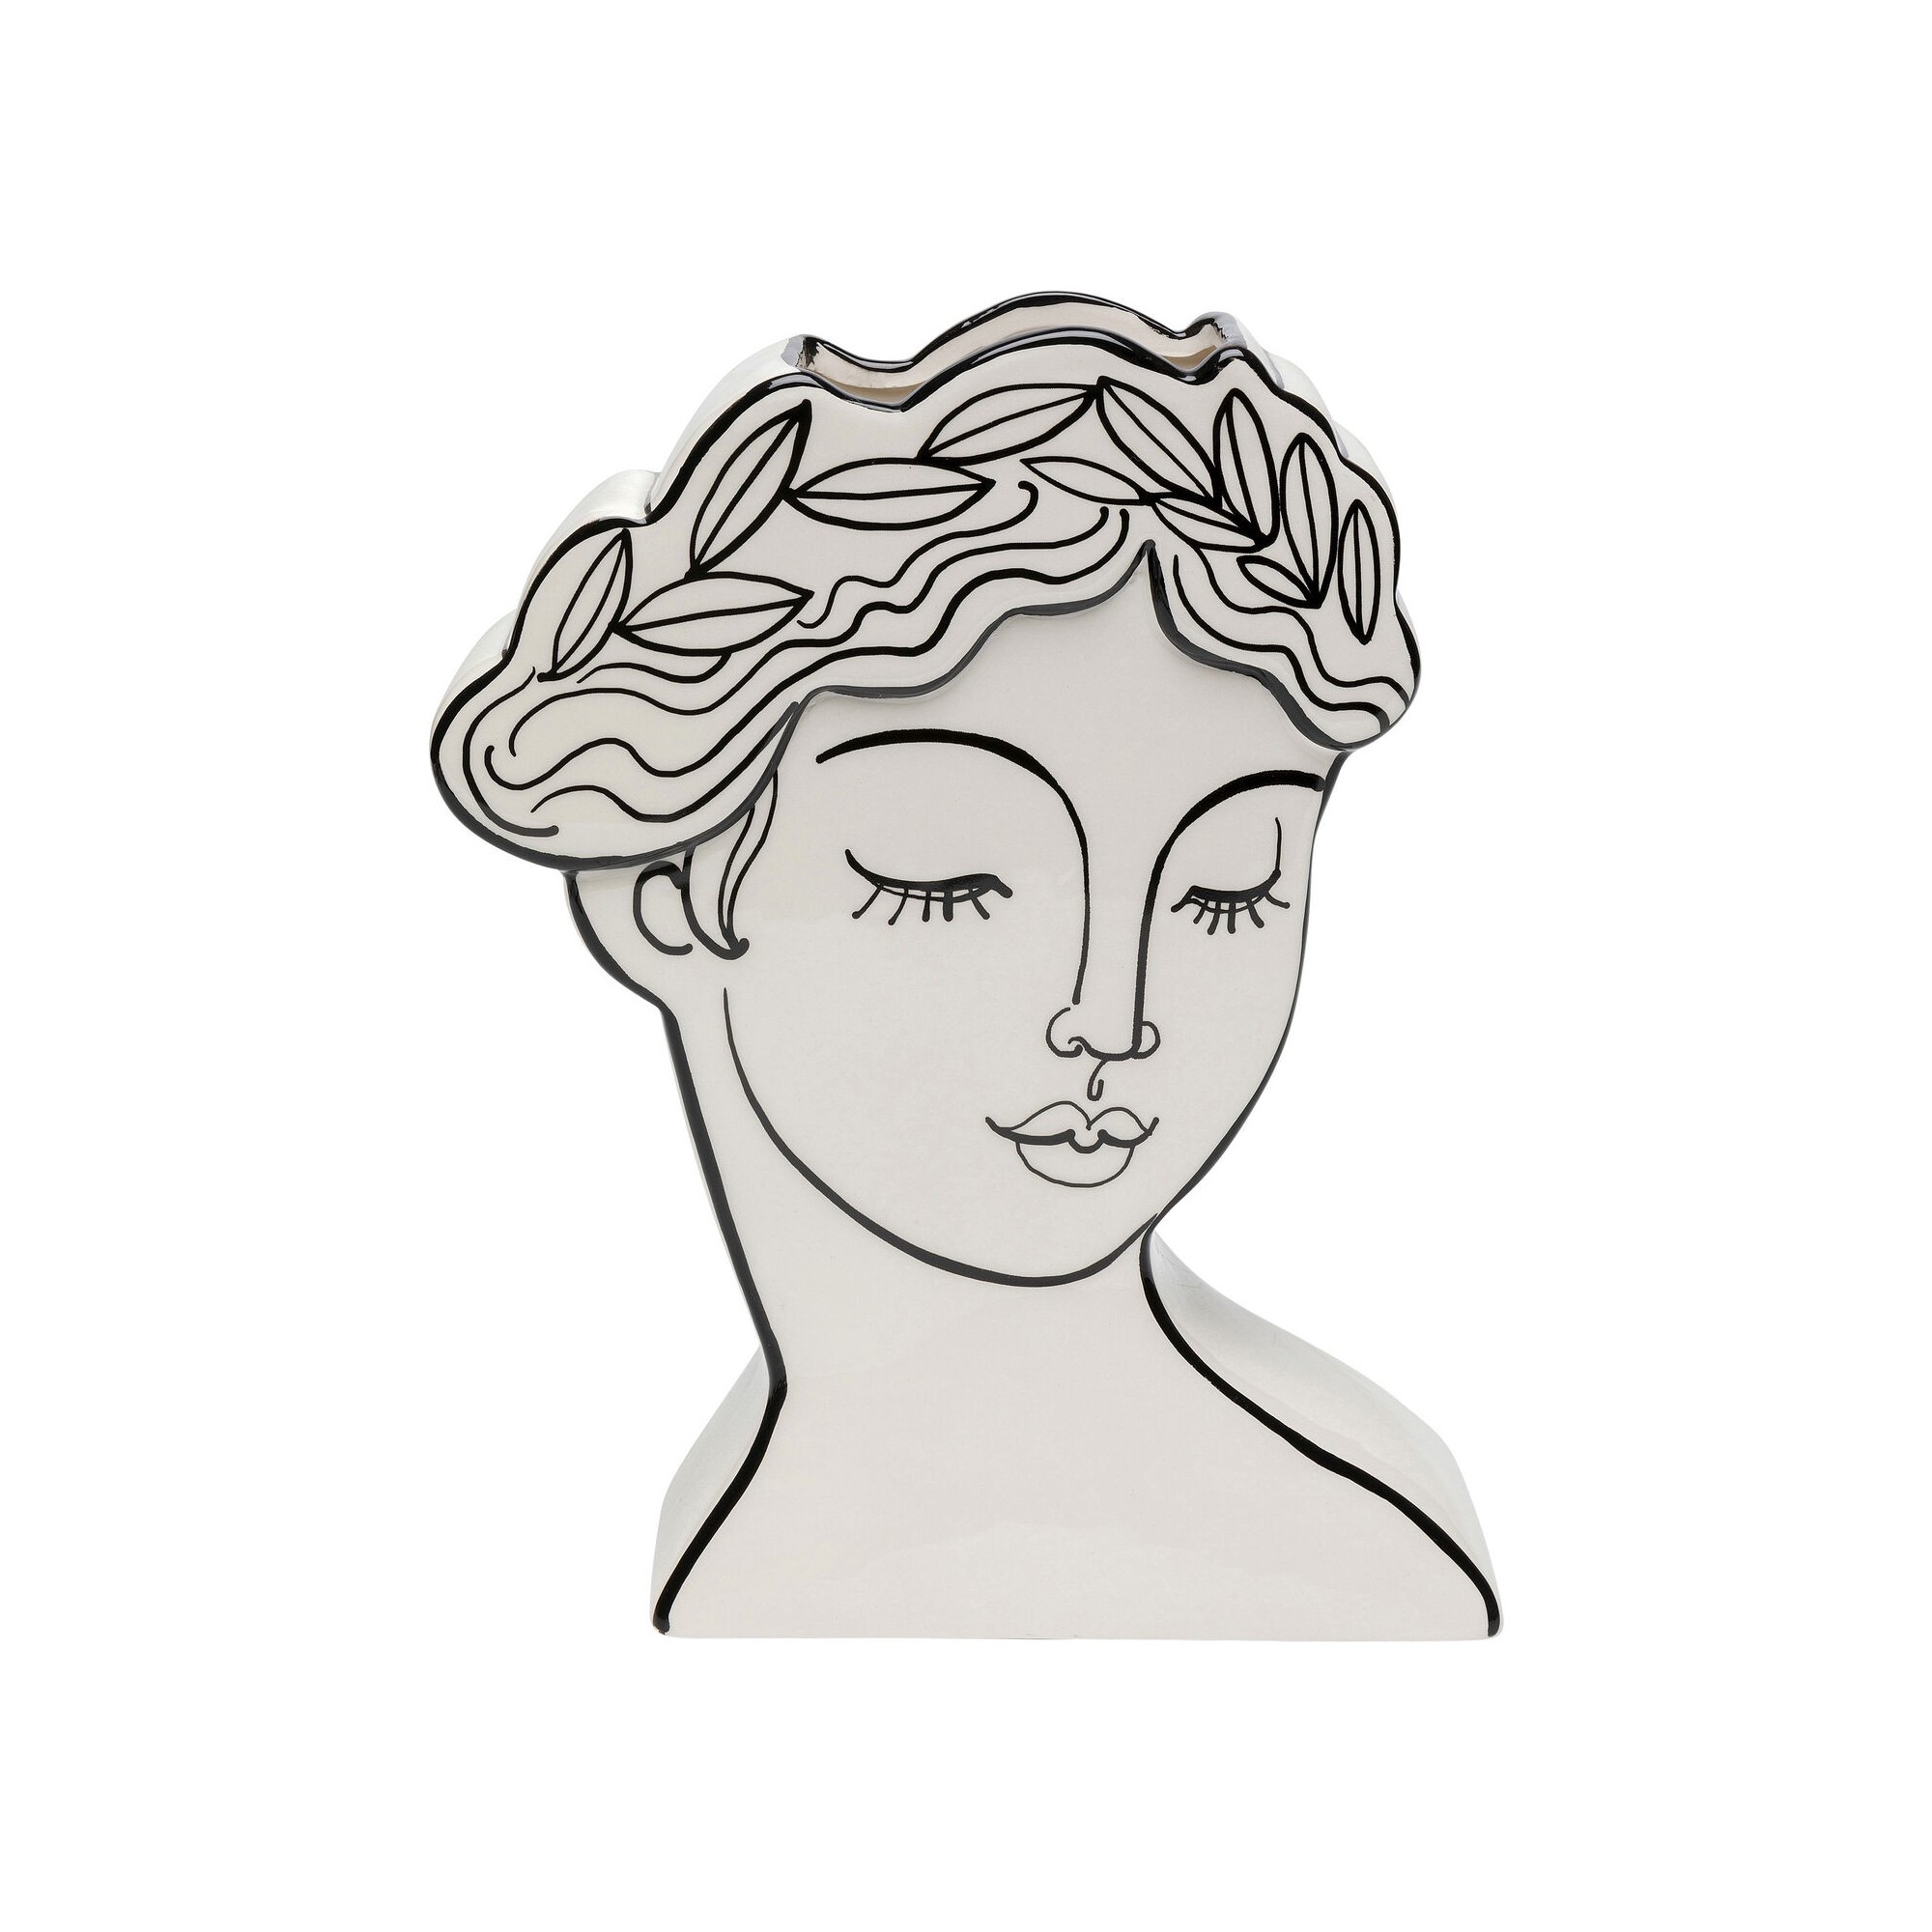 Vase Favola femme buste blanc et noir Kare Design